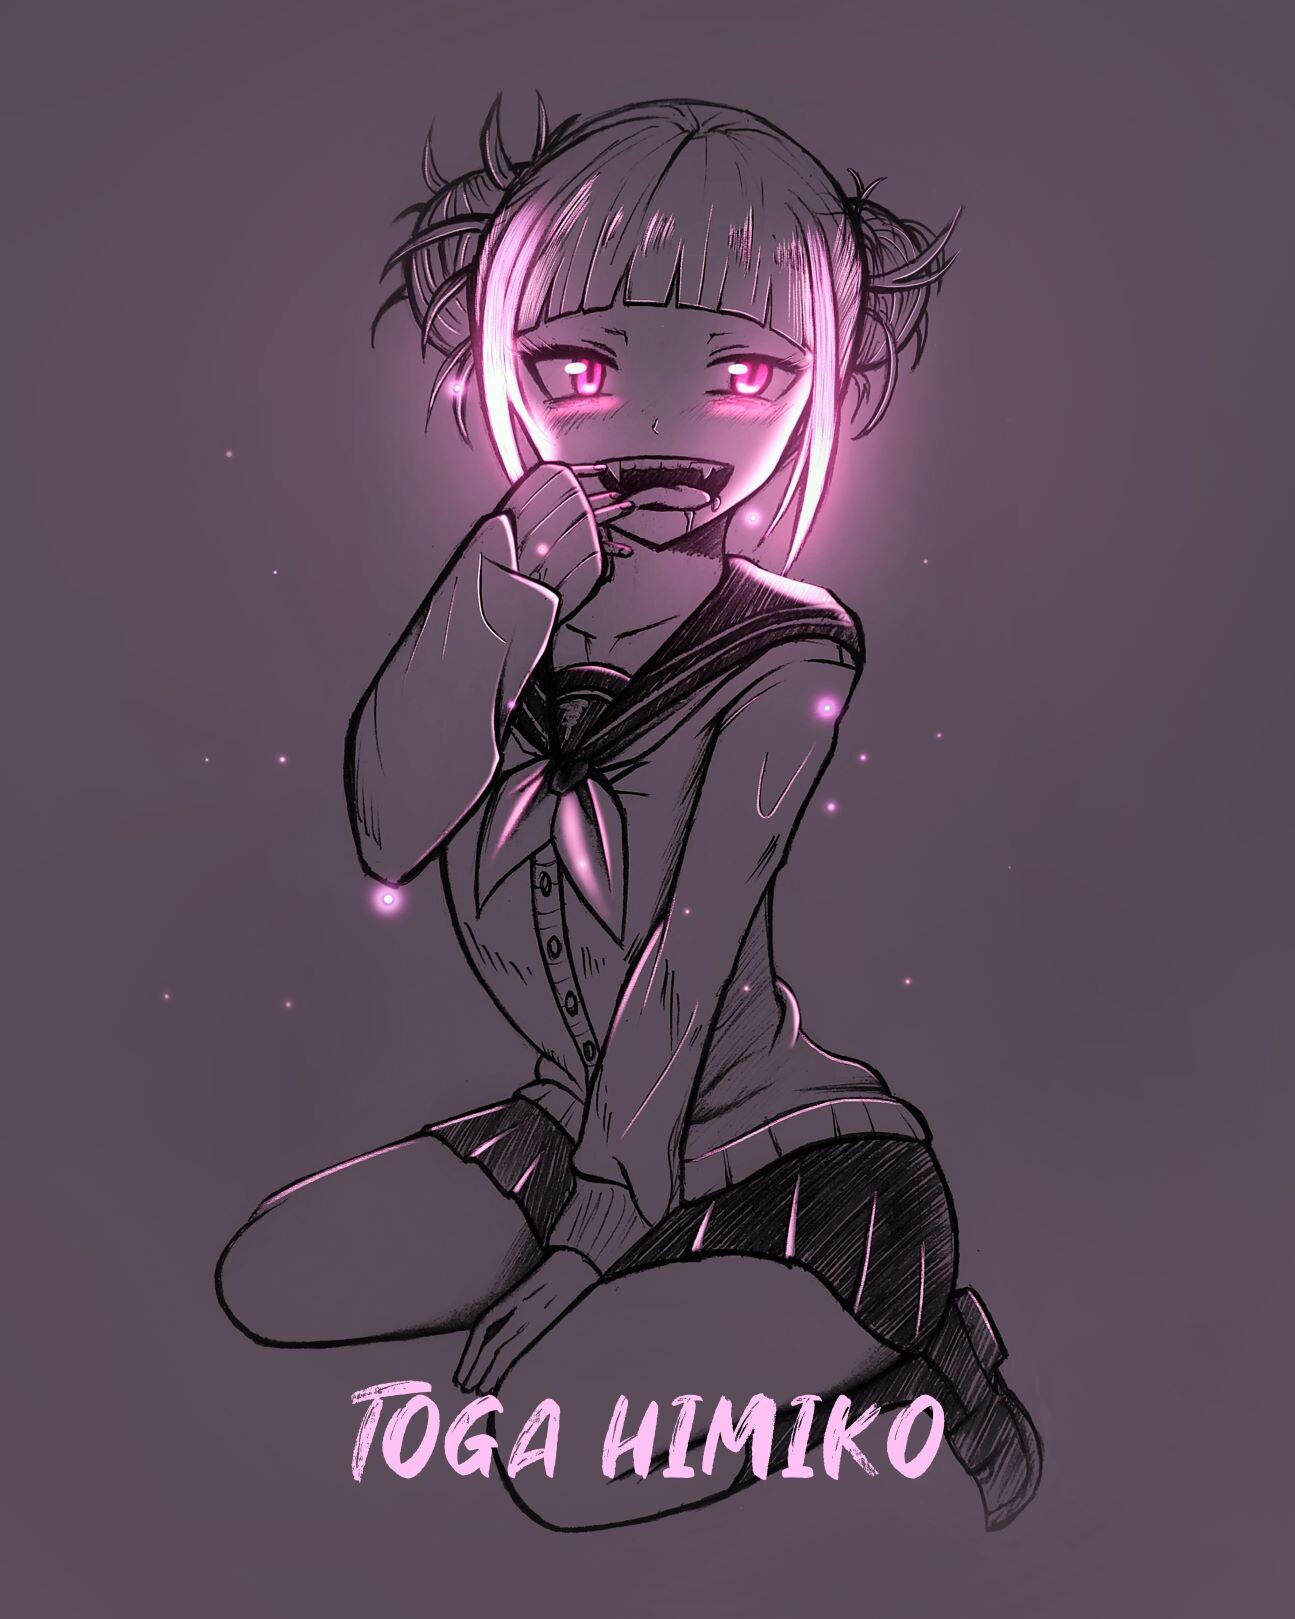 Himiko Toga Art | My Hero Academia! 💥 Amino